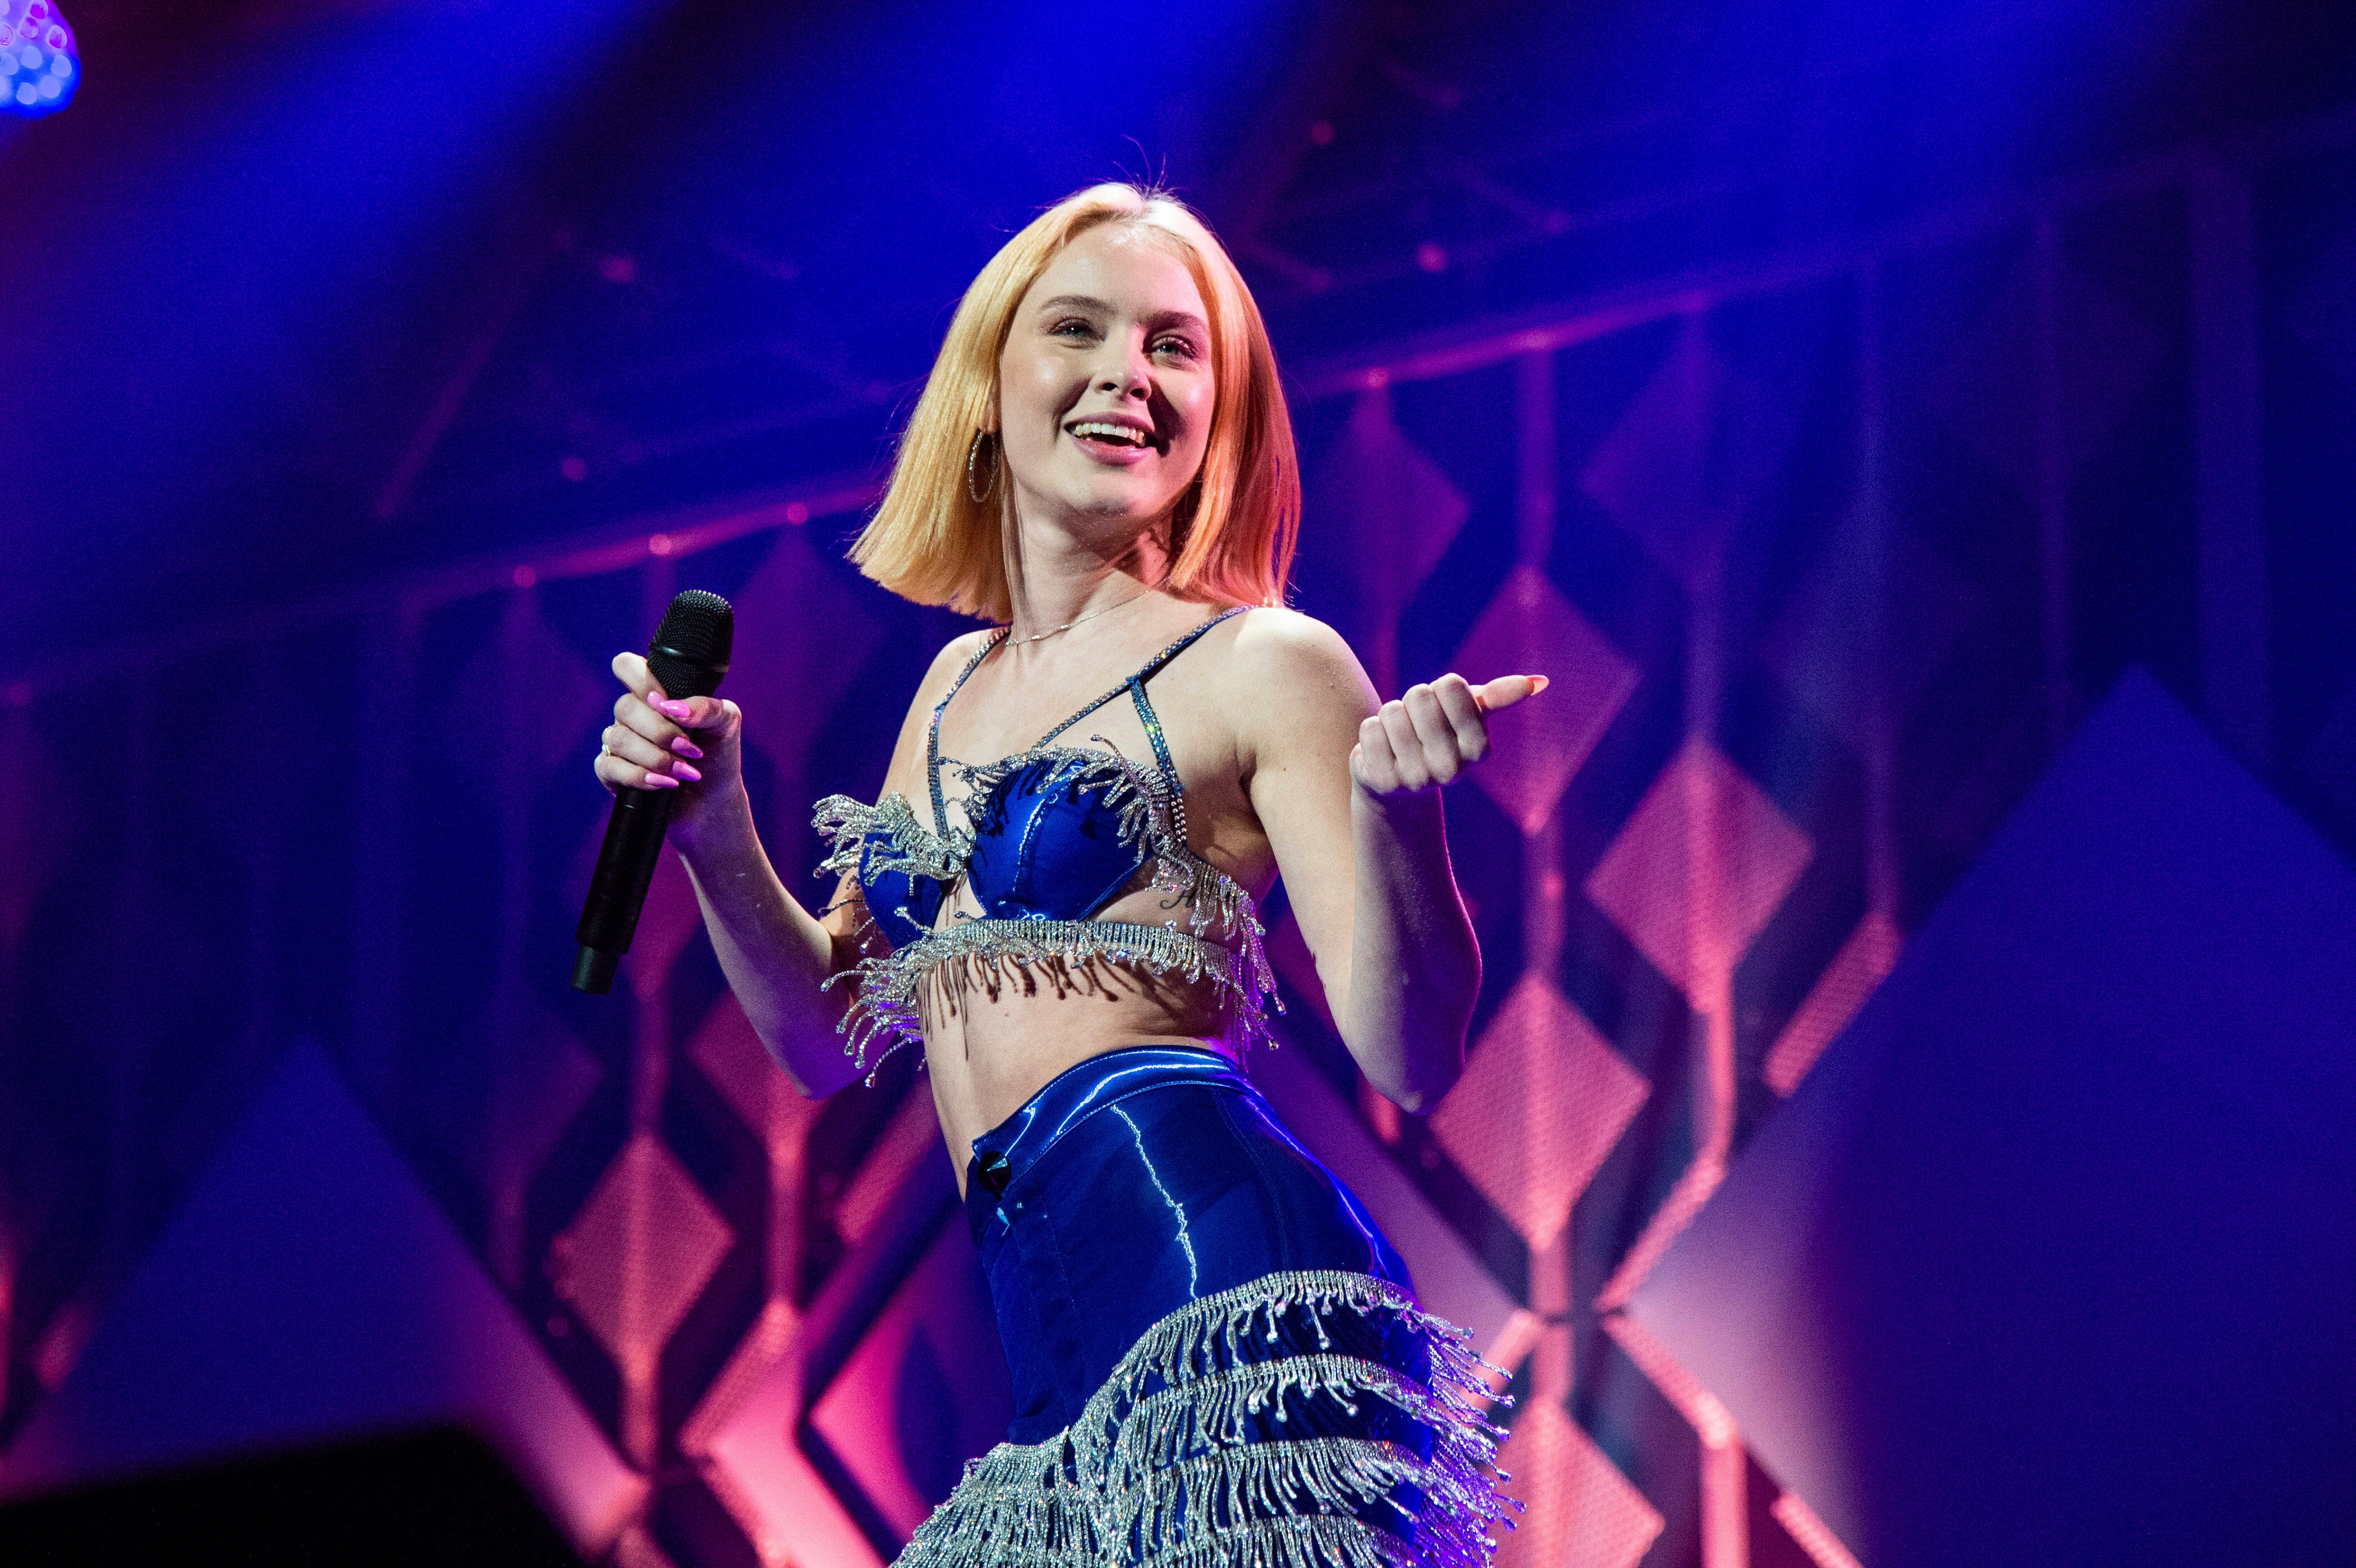 Music Review: Swedish pop singer Zara Larsson's 'Venus' imparts